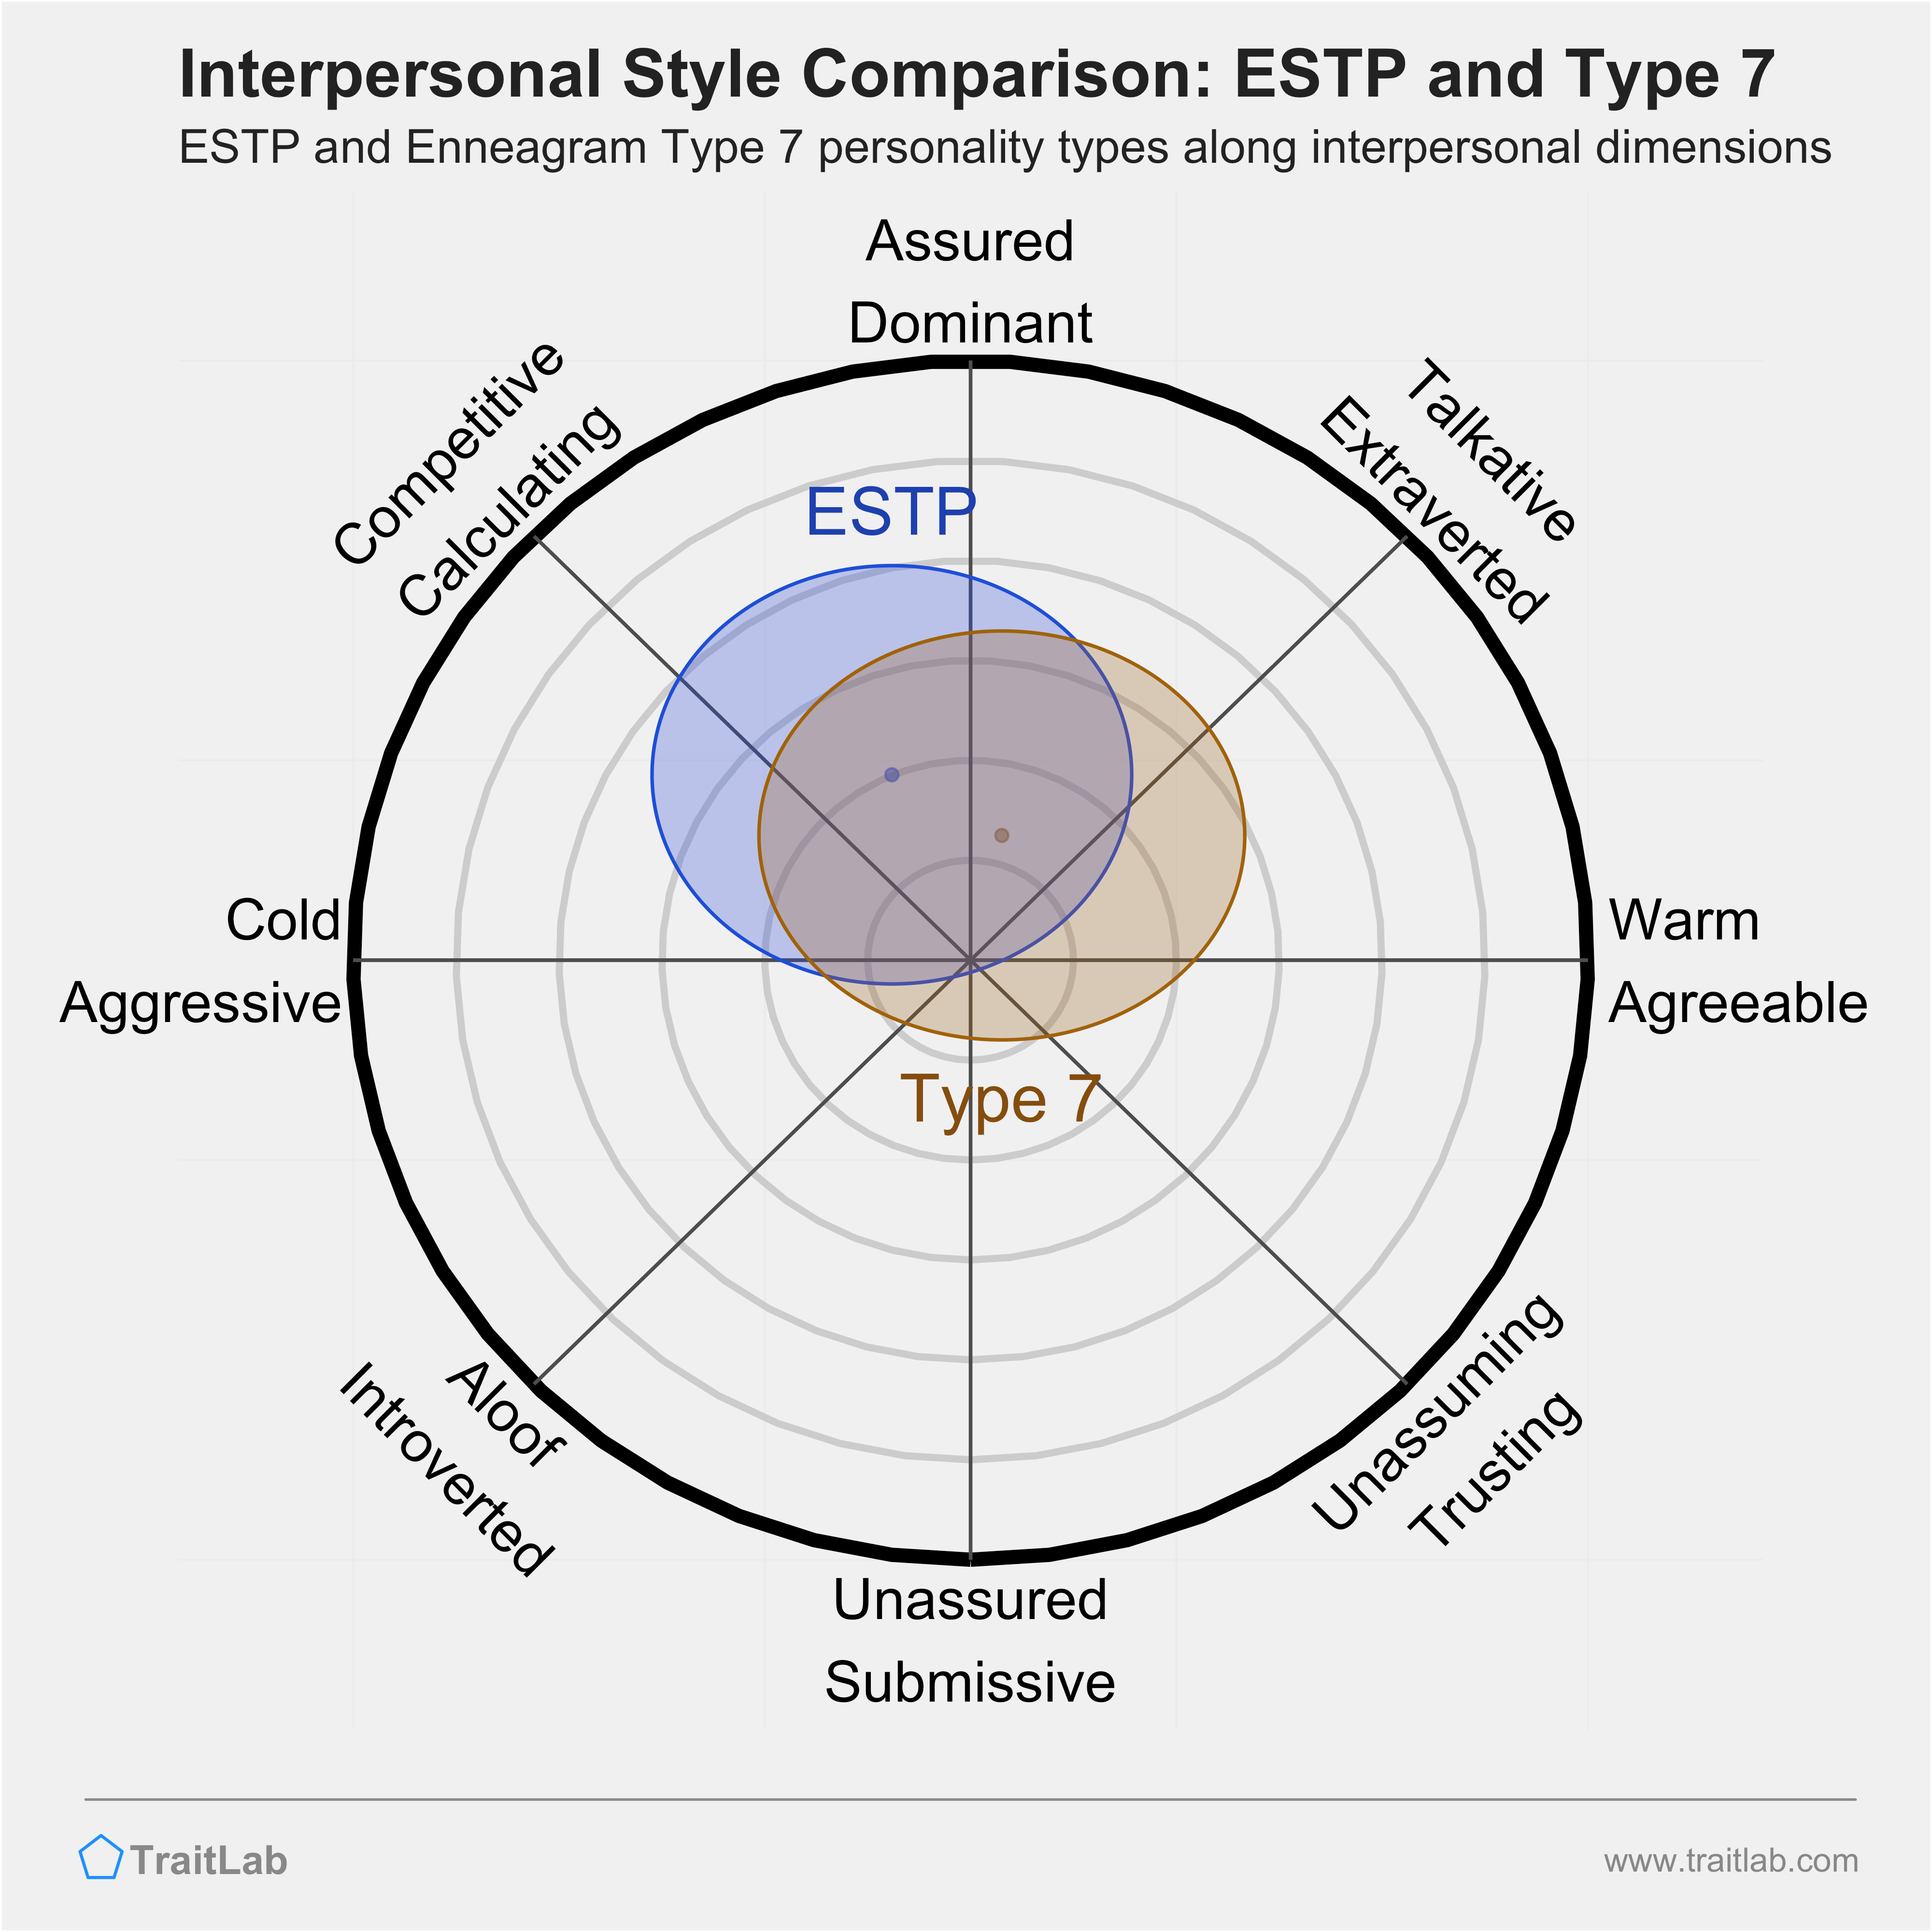 Enneagram ESTP and Type 7 comparison across interpersonal dimensions